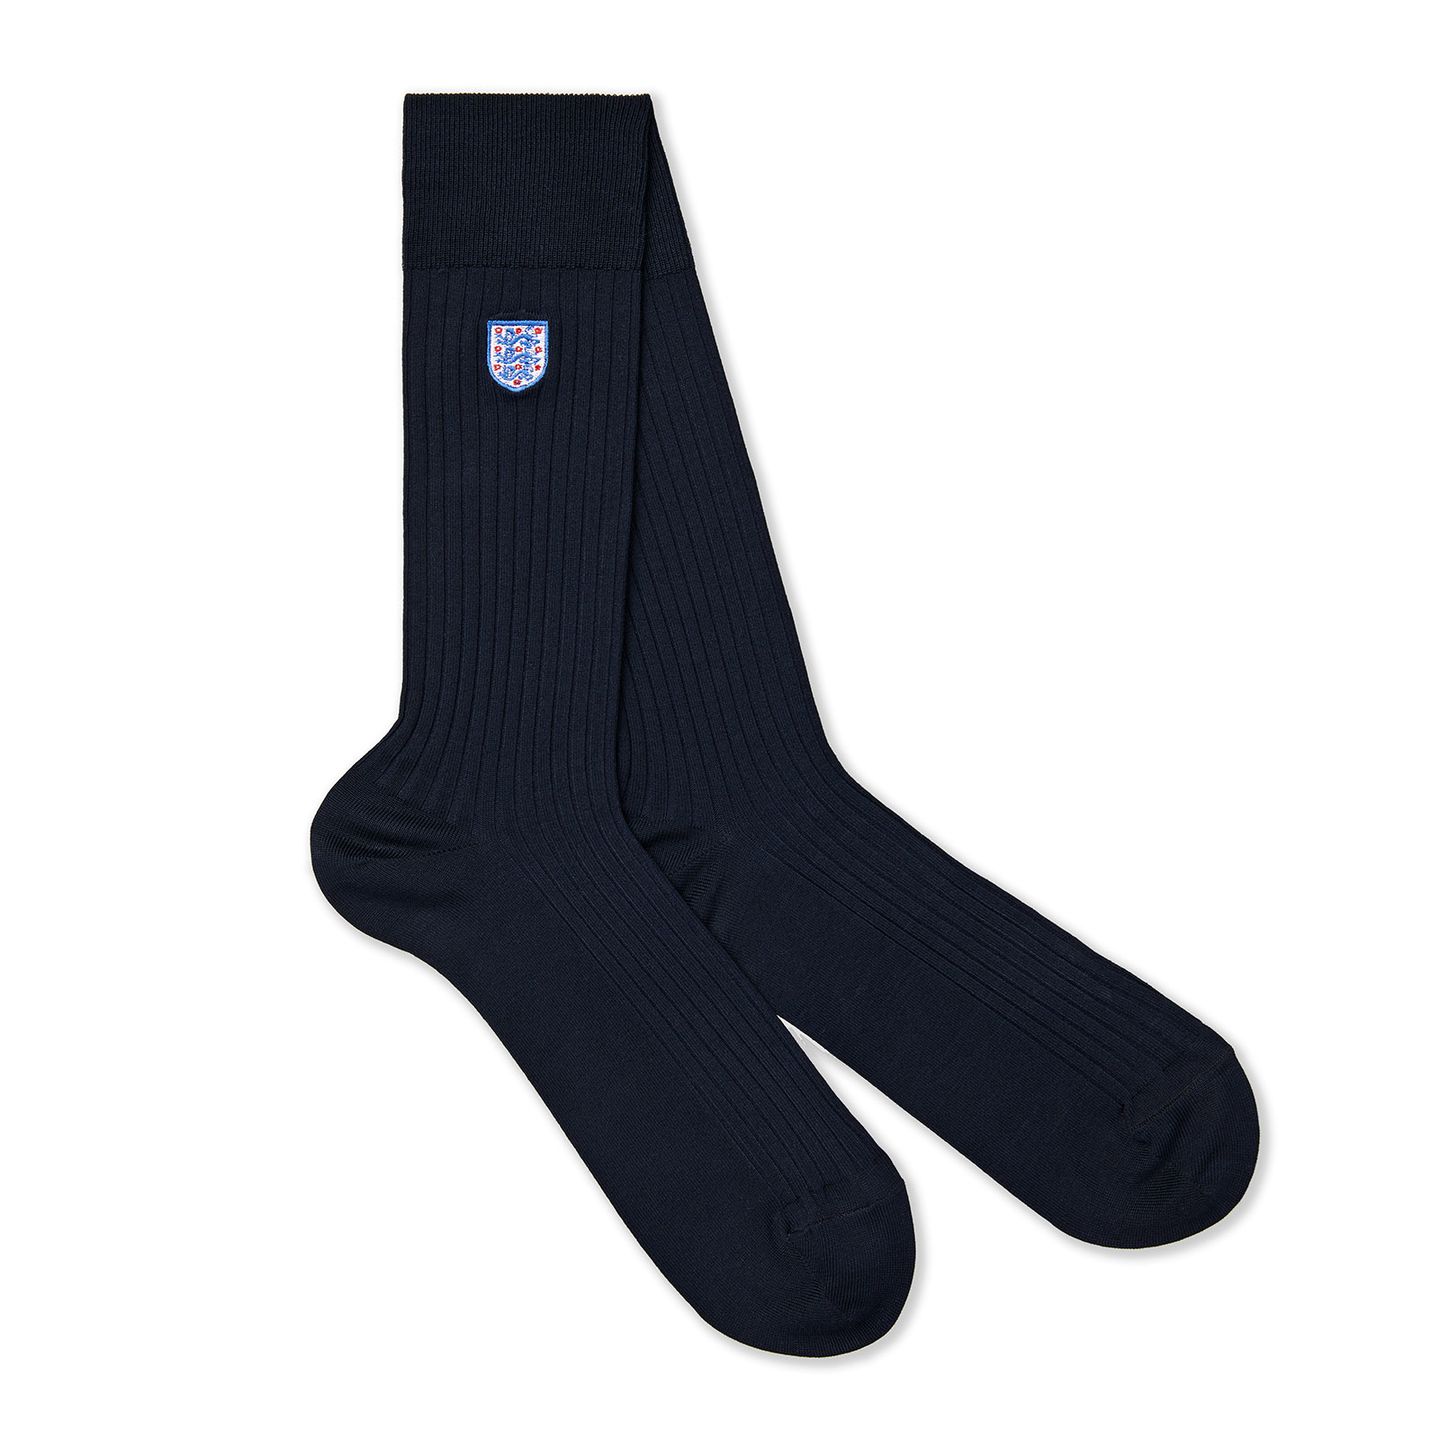 Dark navy blue socks with the 3 lions England logo